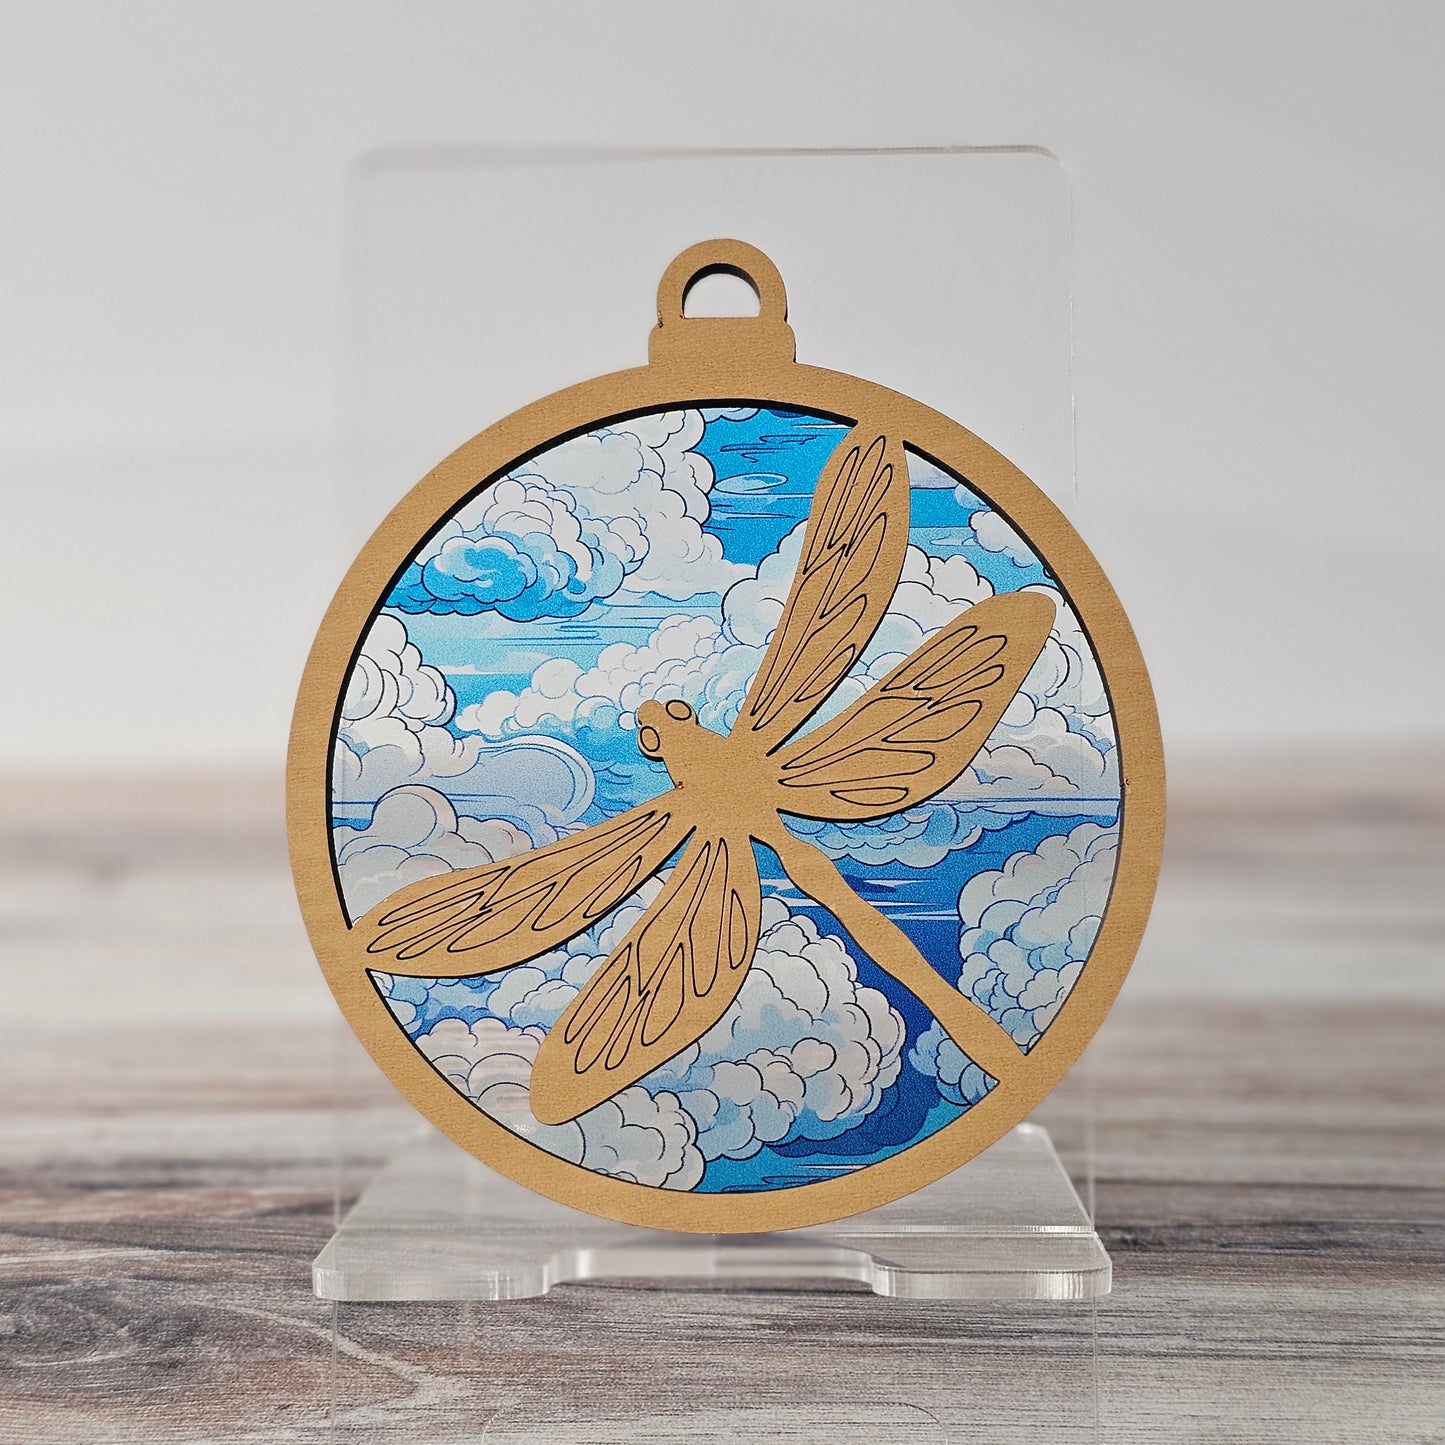 Dragonfly Suncatcher Ornament - Translucent Clouds